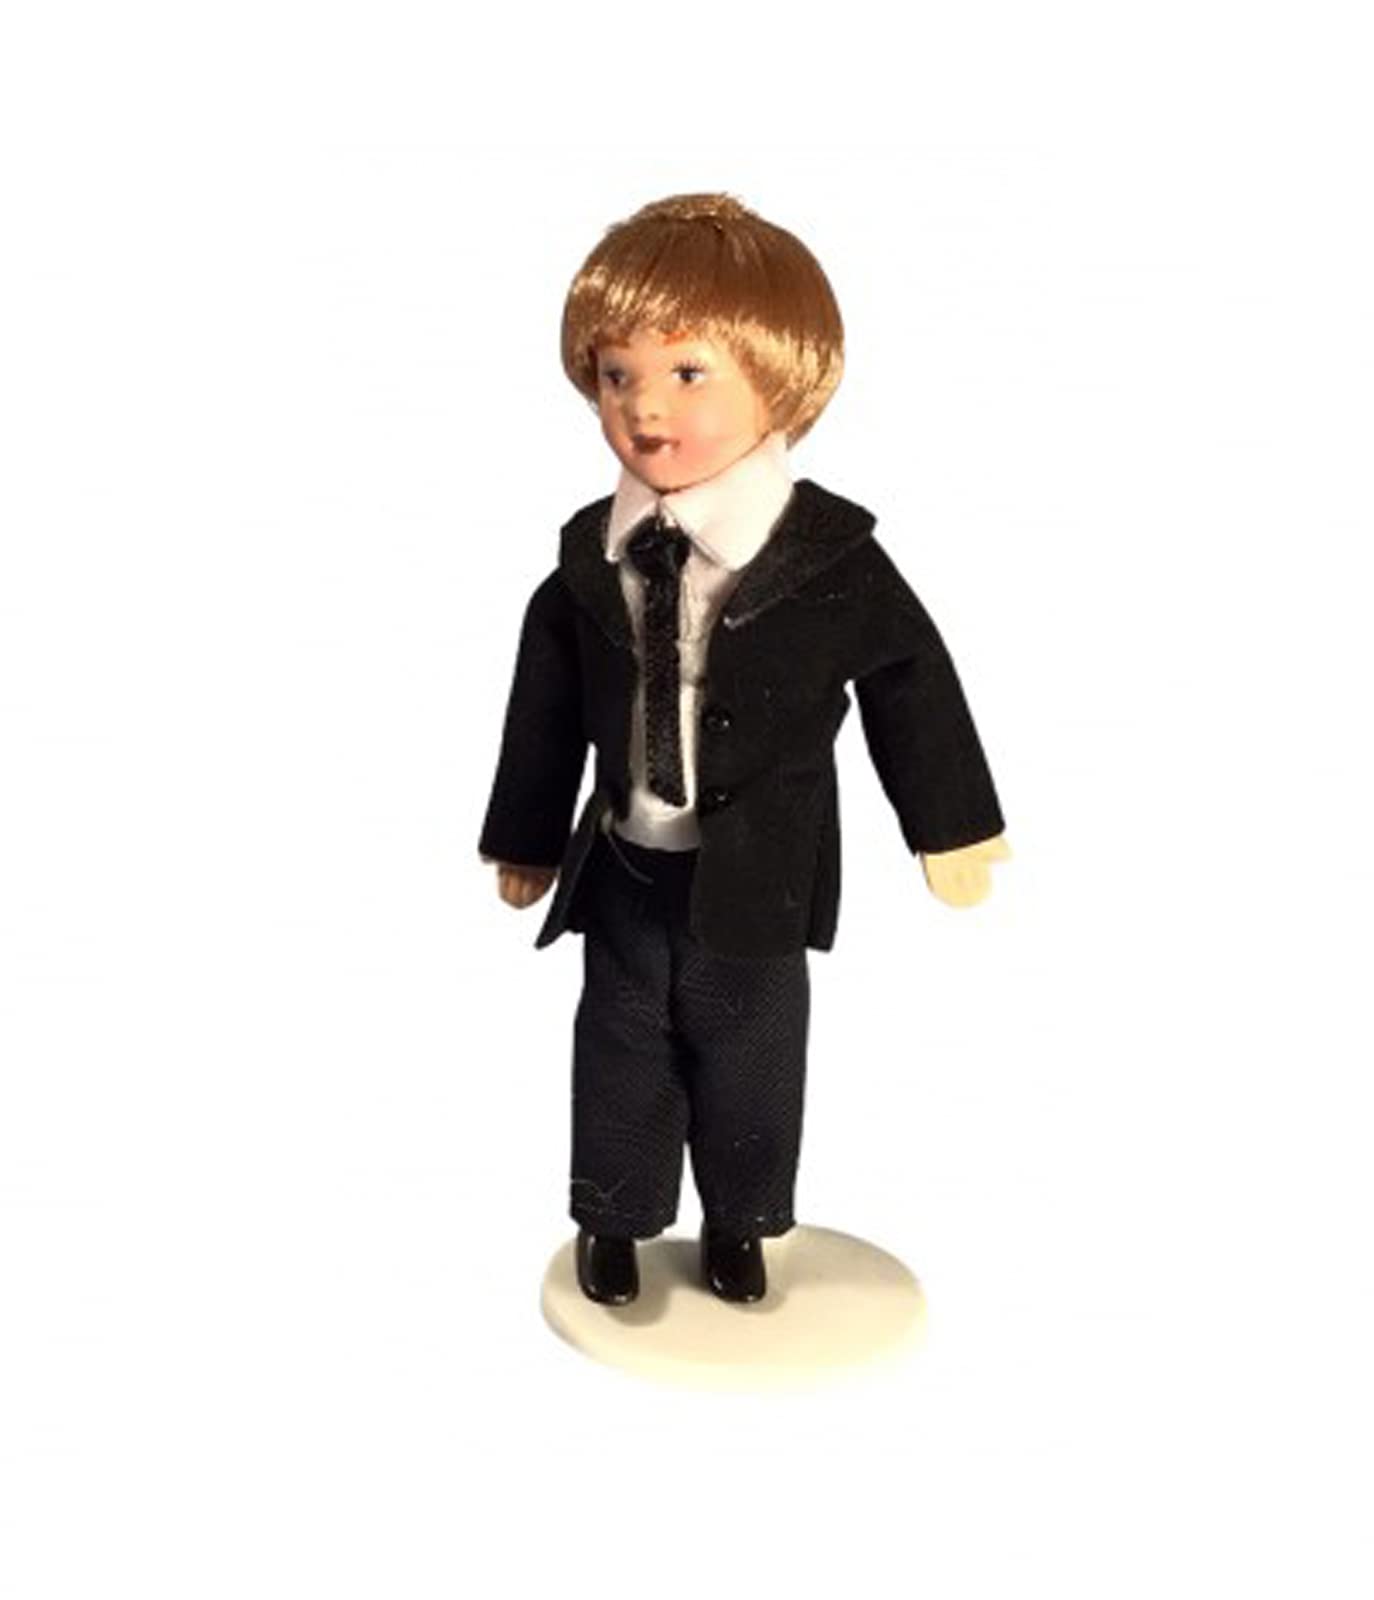 Melody Jane Dolls Houses Dollhouse Smart Little Boy in Black Suit Porcelain 1:12 Scale People